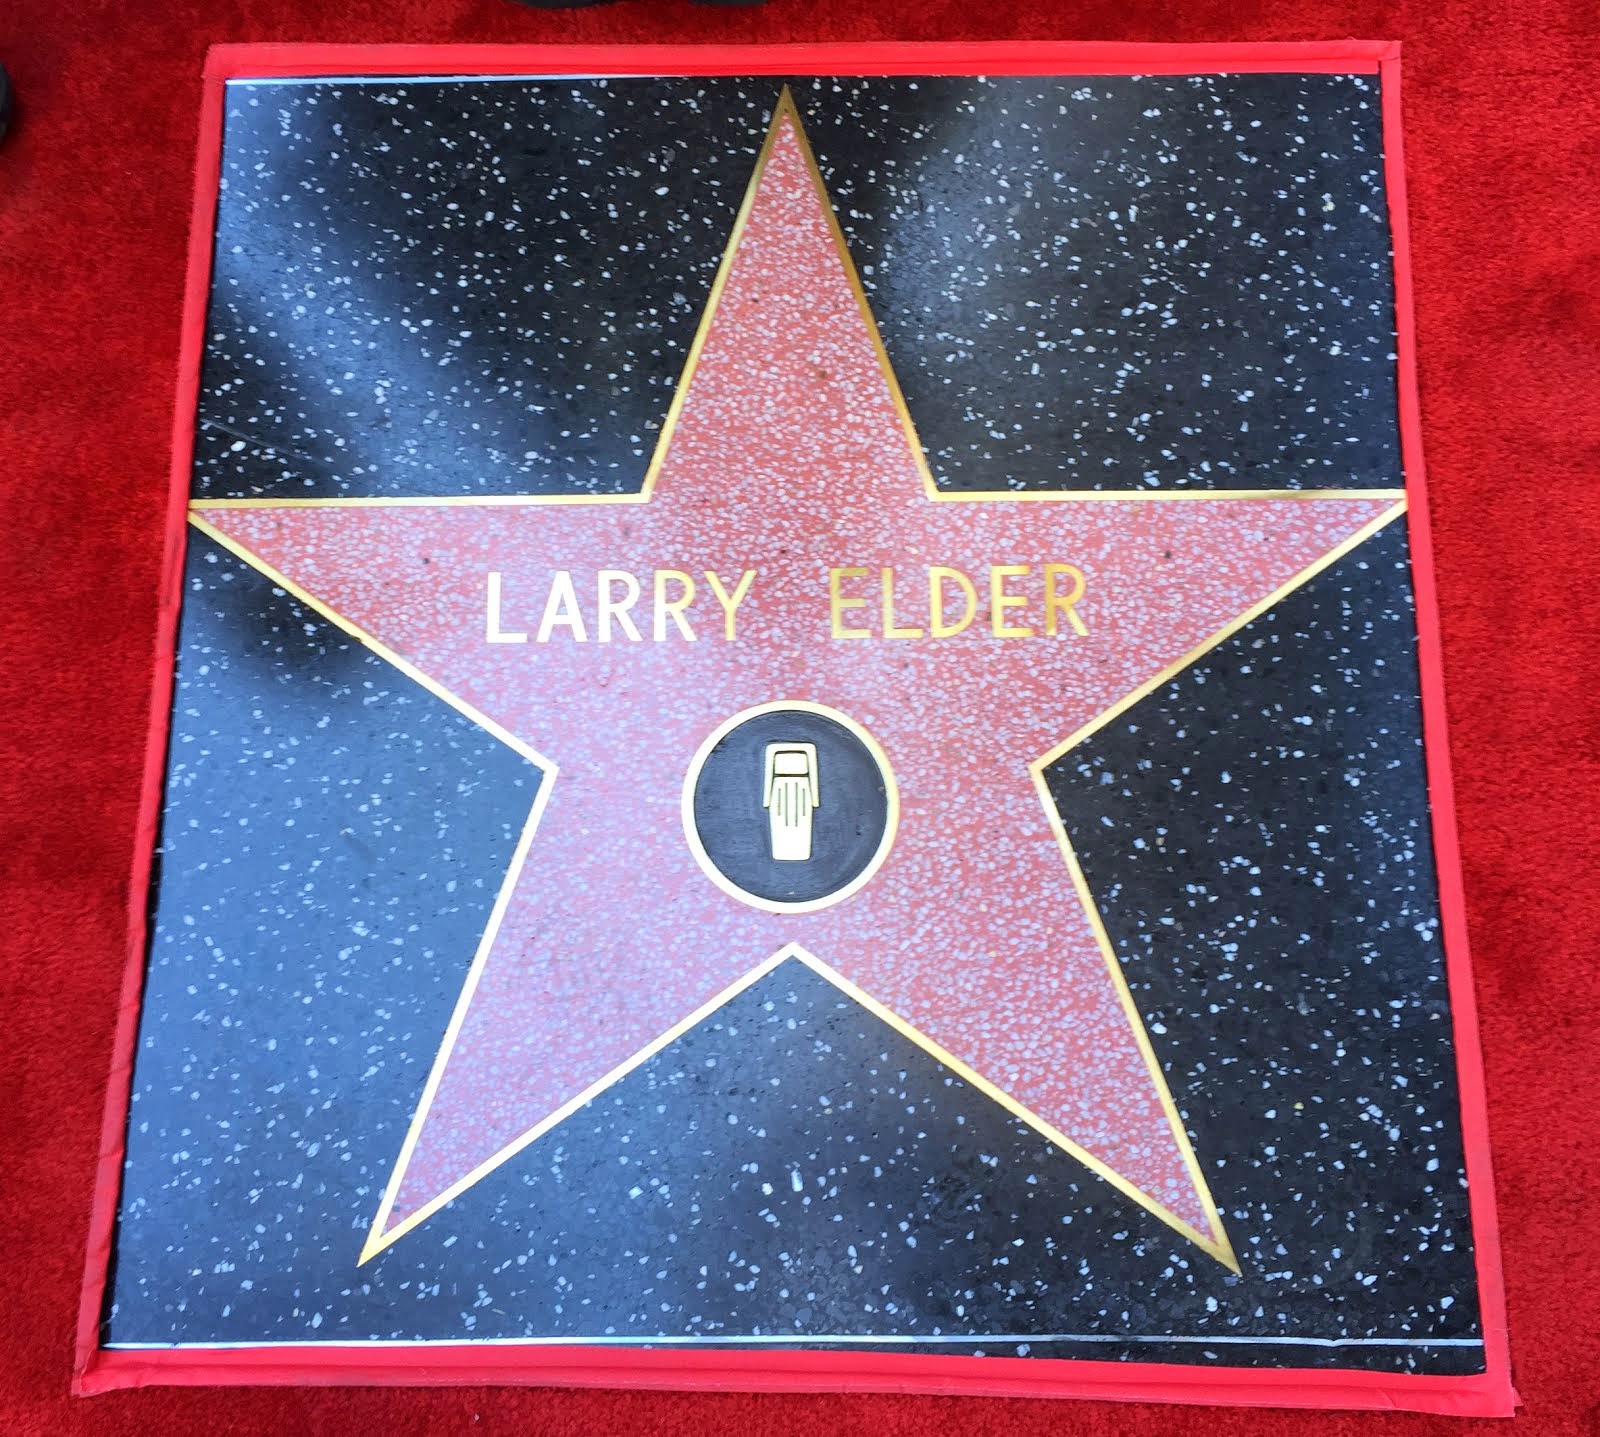 LARRY ELDER RECEIVES A STAR ON THE HOLLYWOOD WALK OF FAME, APRIL 27, 2015